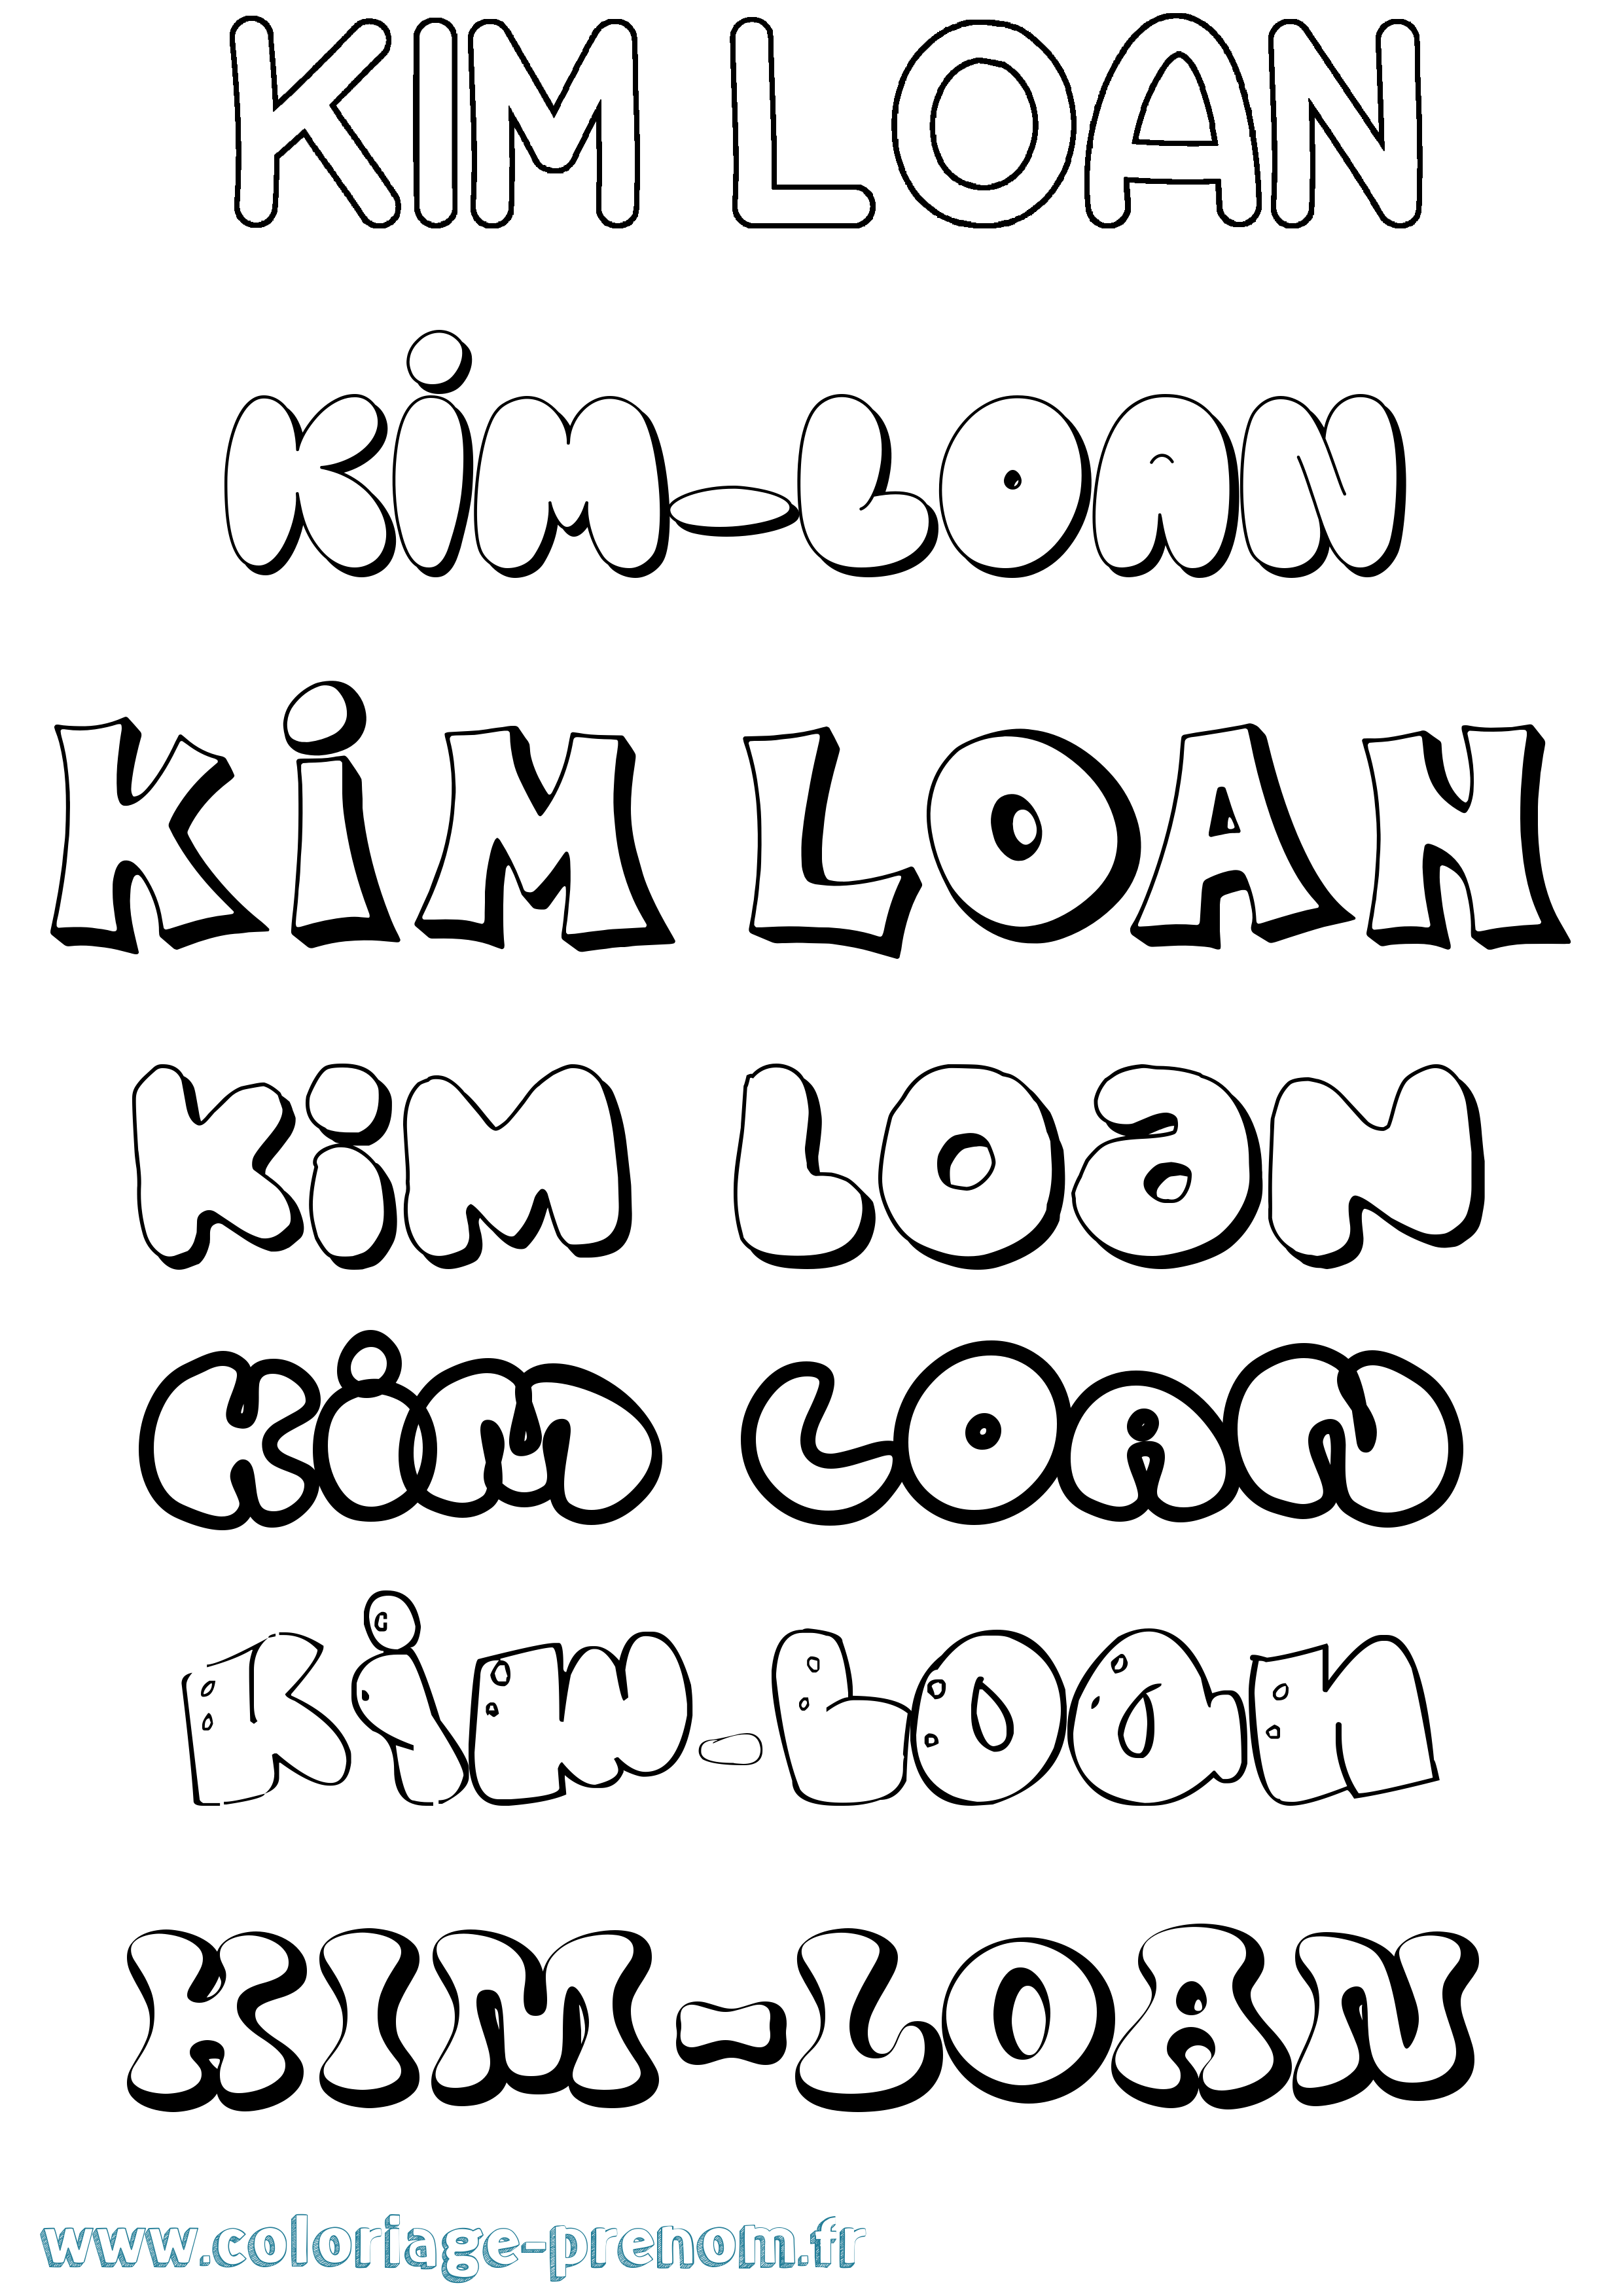 Coloriage prénom Kim-Loan Bubble